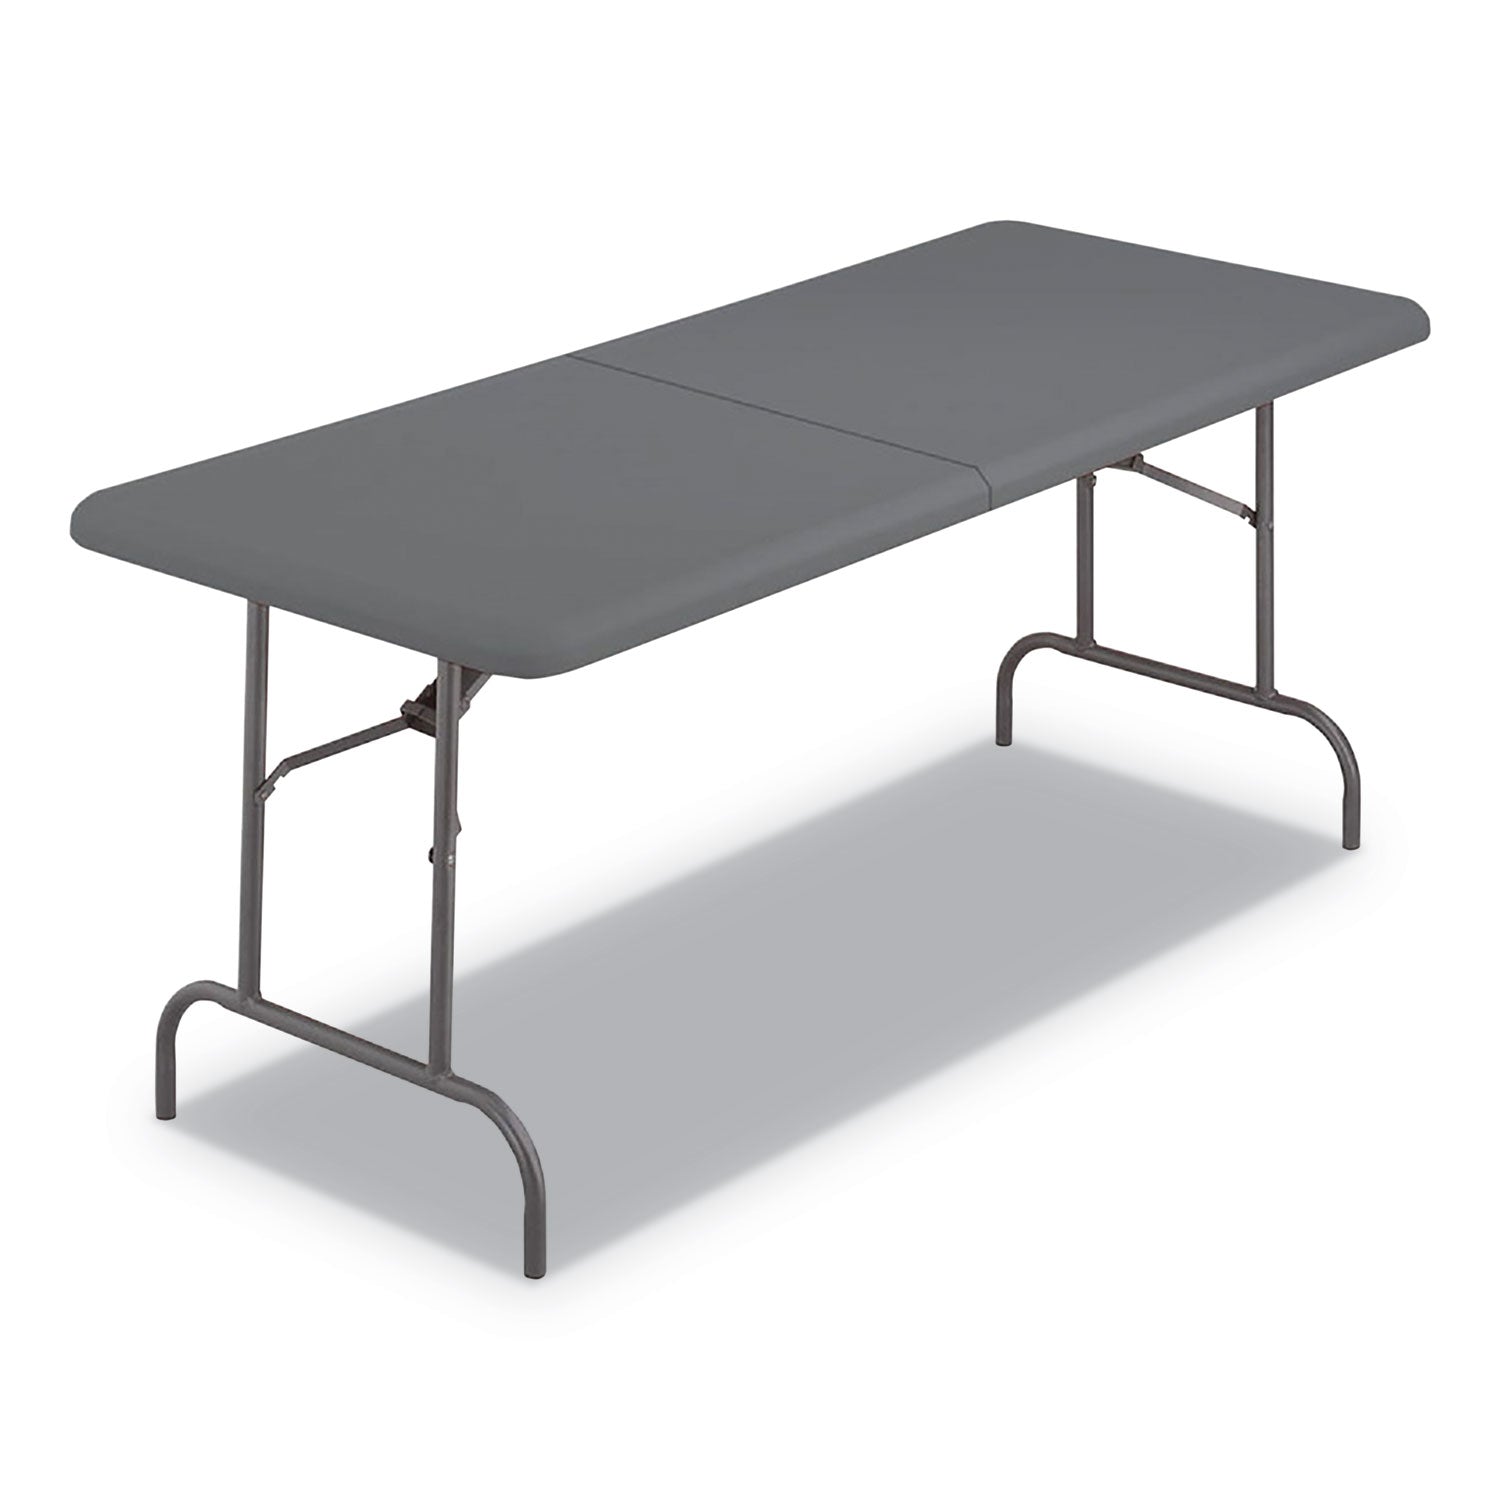 IndestrucTable Classic Bi-Folding Table, Rectangular, 30" x 72" x 29", Charcoal - 